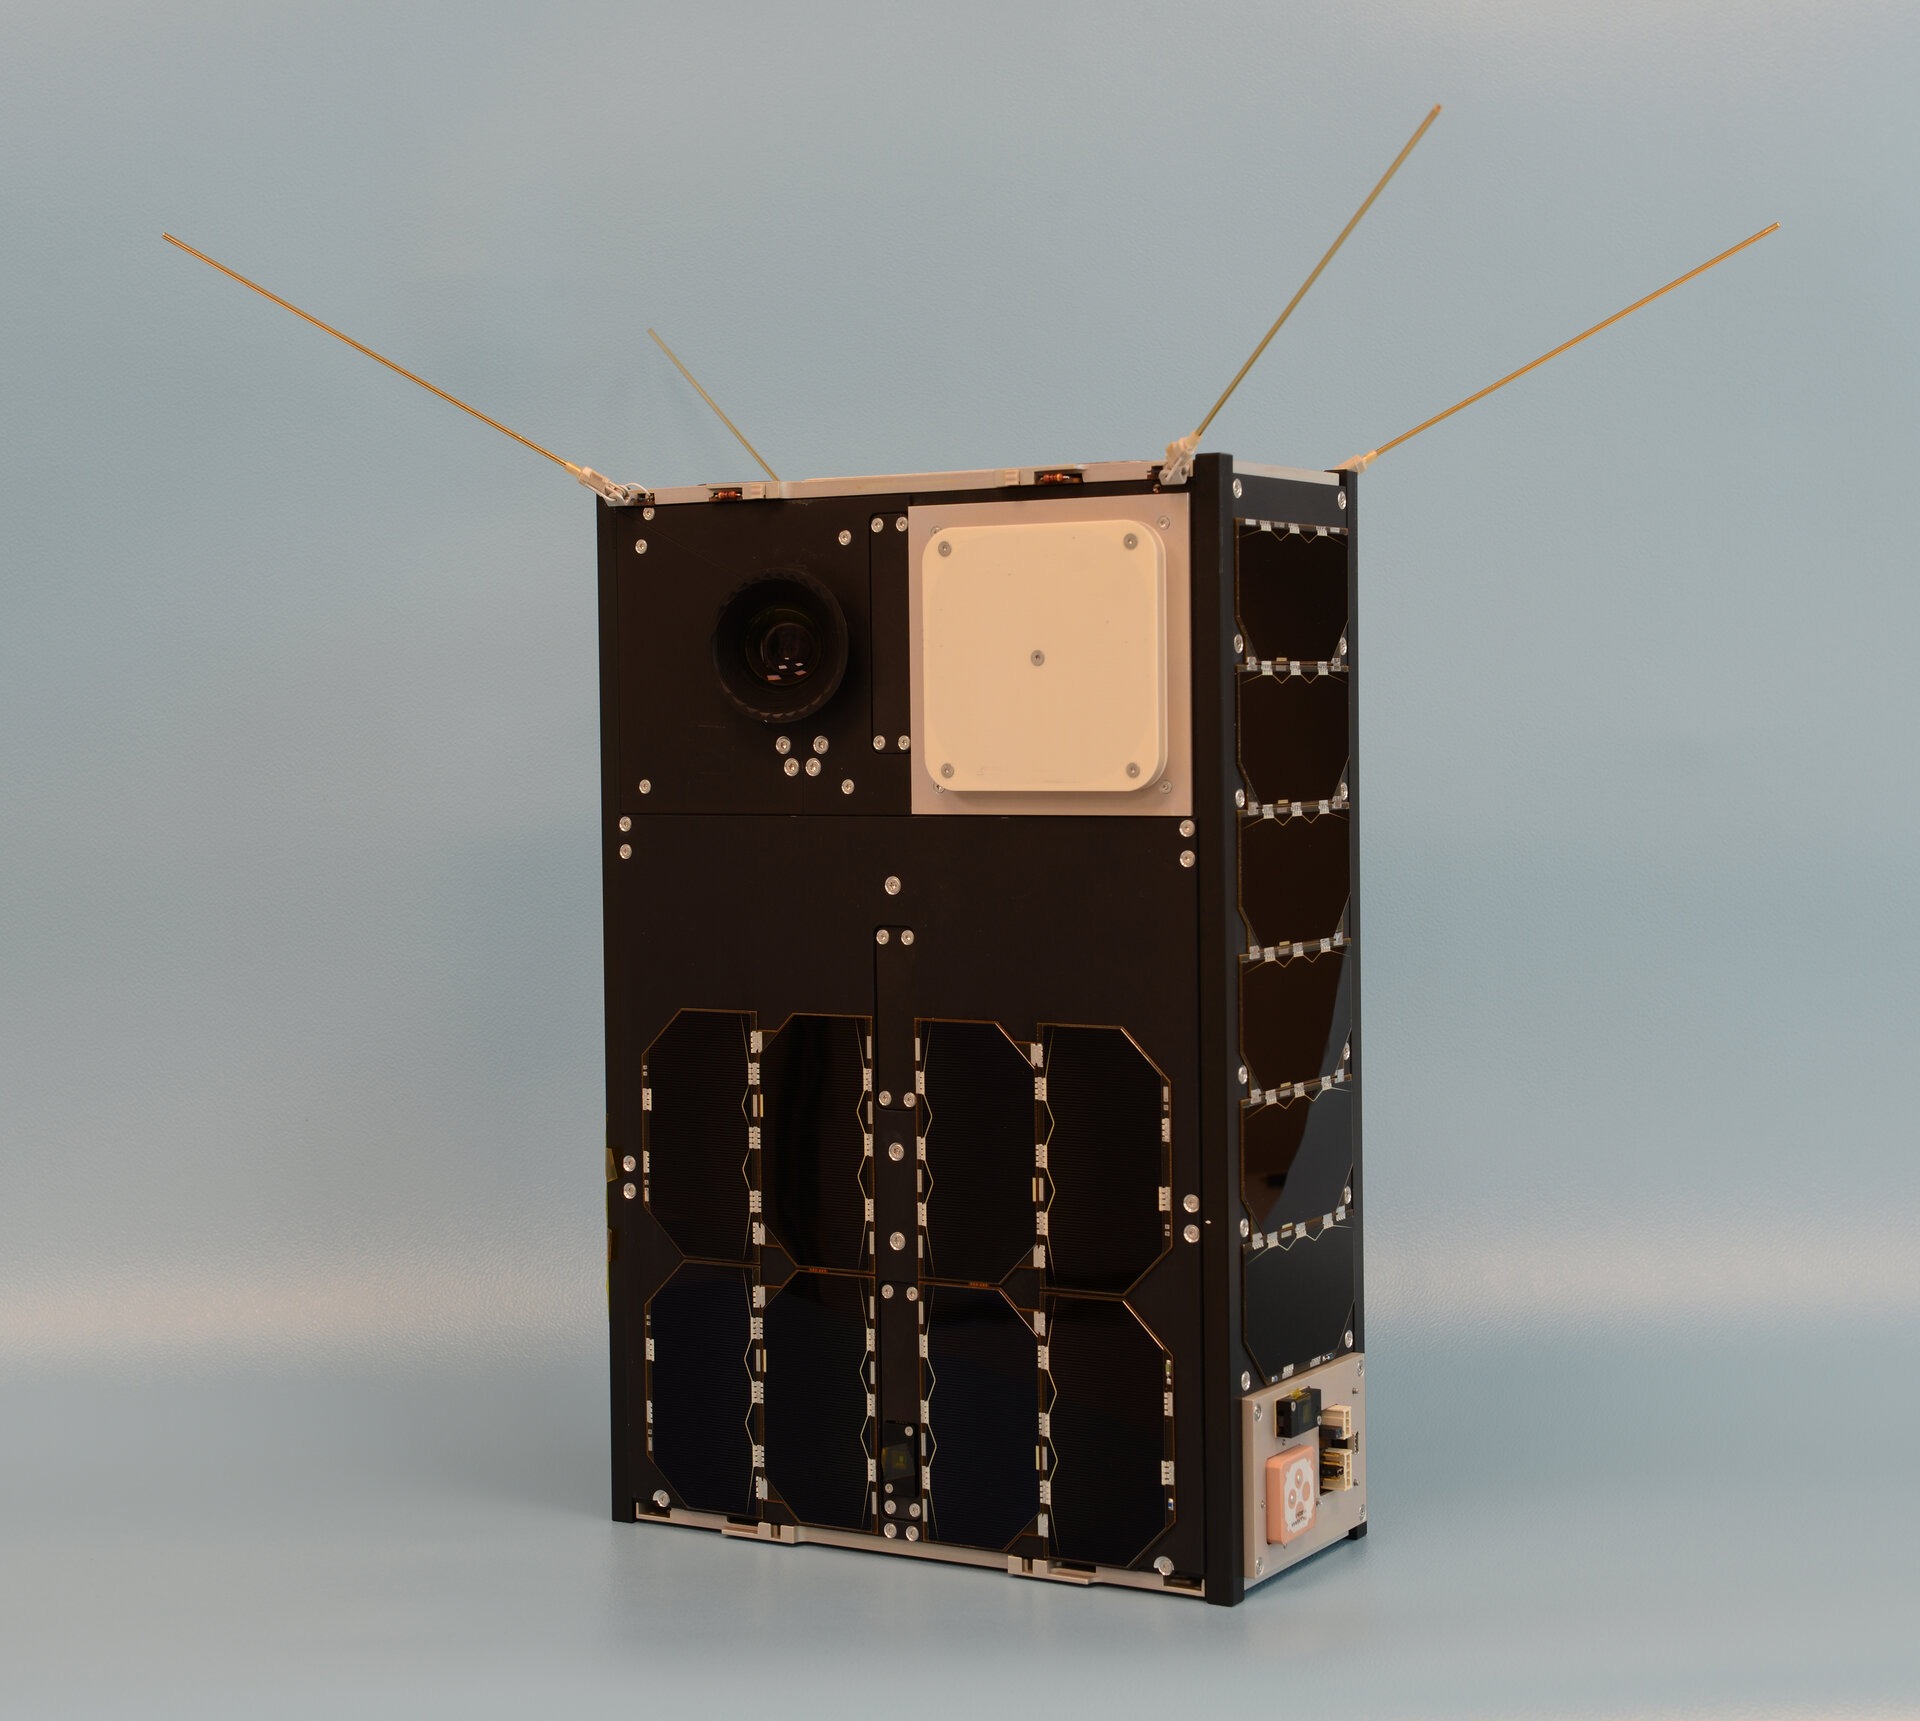 GomX-4B CubeSat